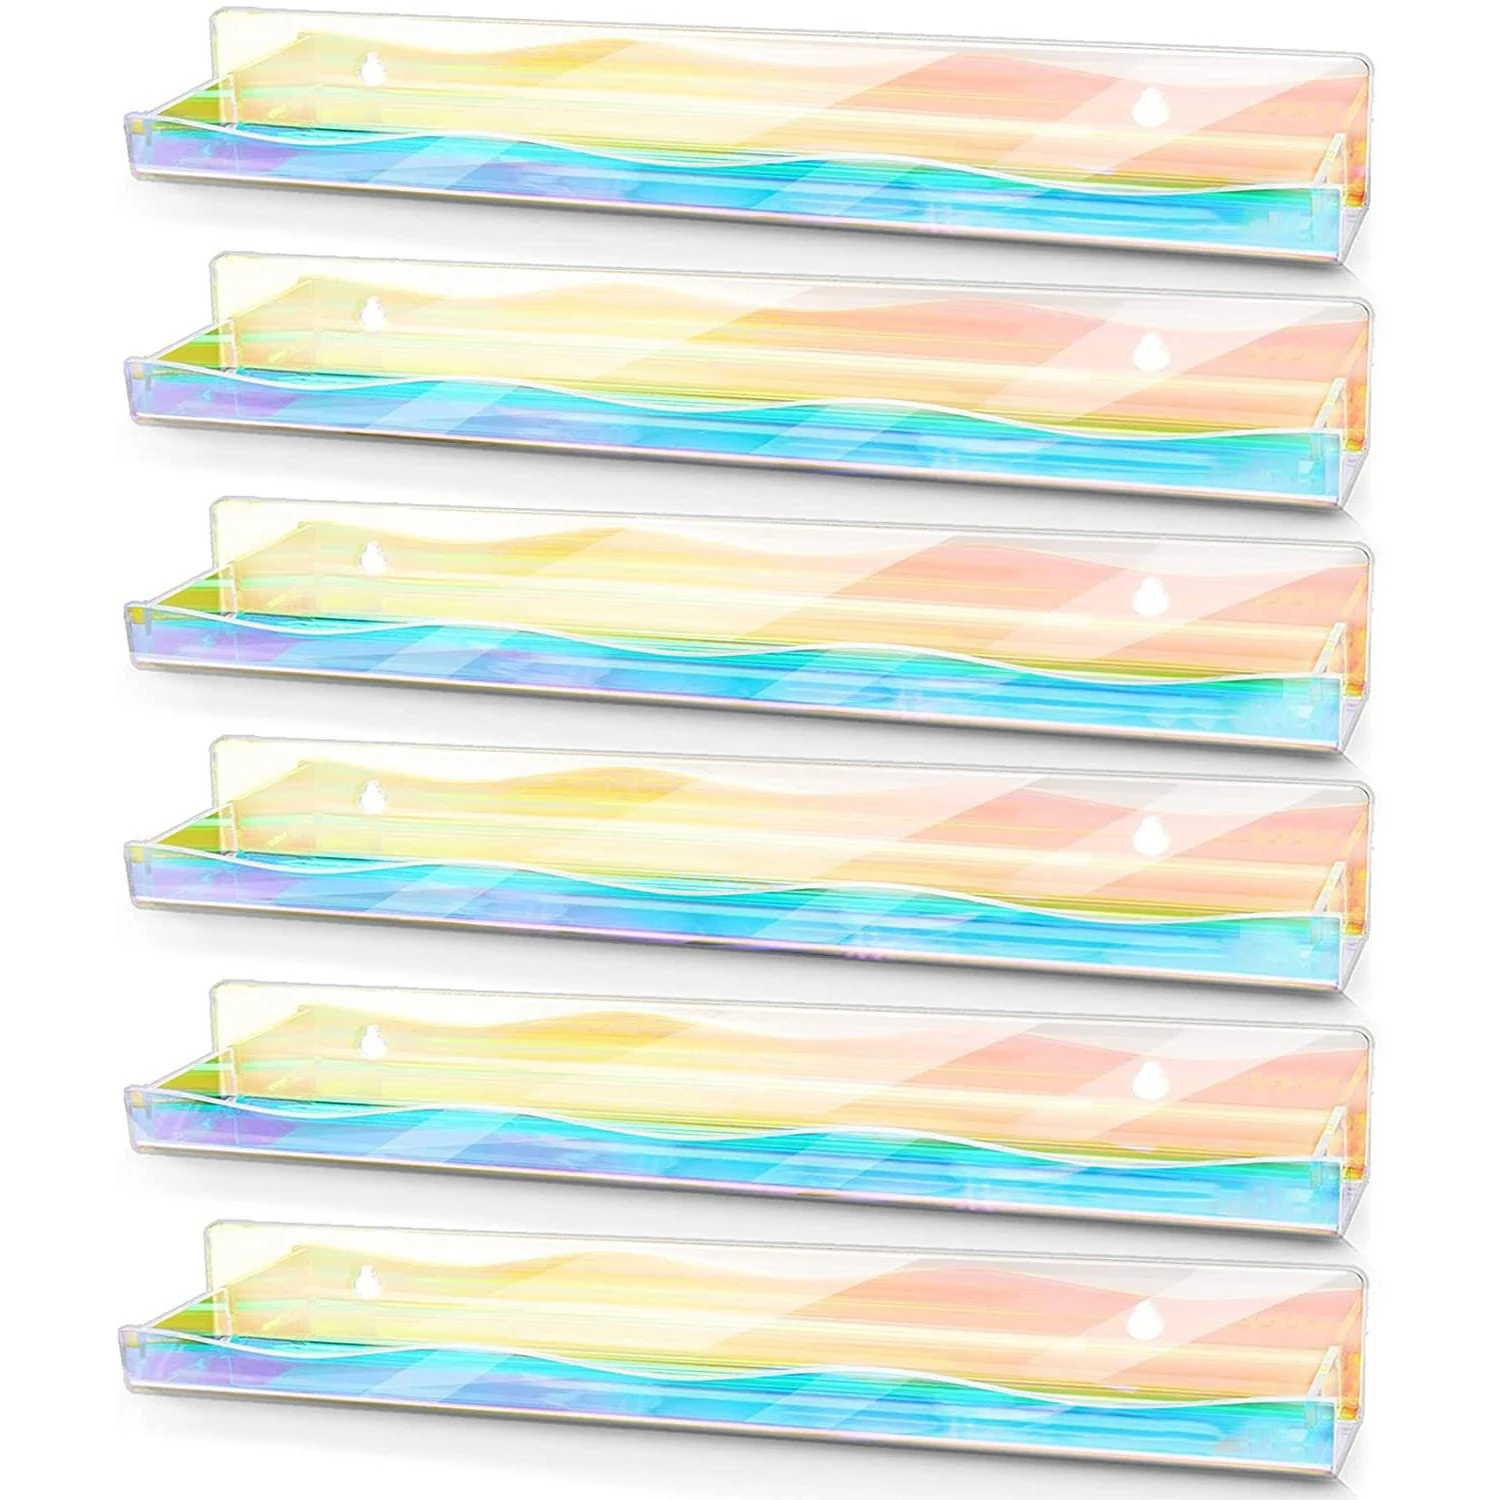 6PCS Nail Polish Rack Wall Mounted Shelf,Rainbow Iridescent Acrylic Organizer Acrylic Floating Shelves for Bookshelf,Toy Record